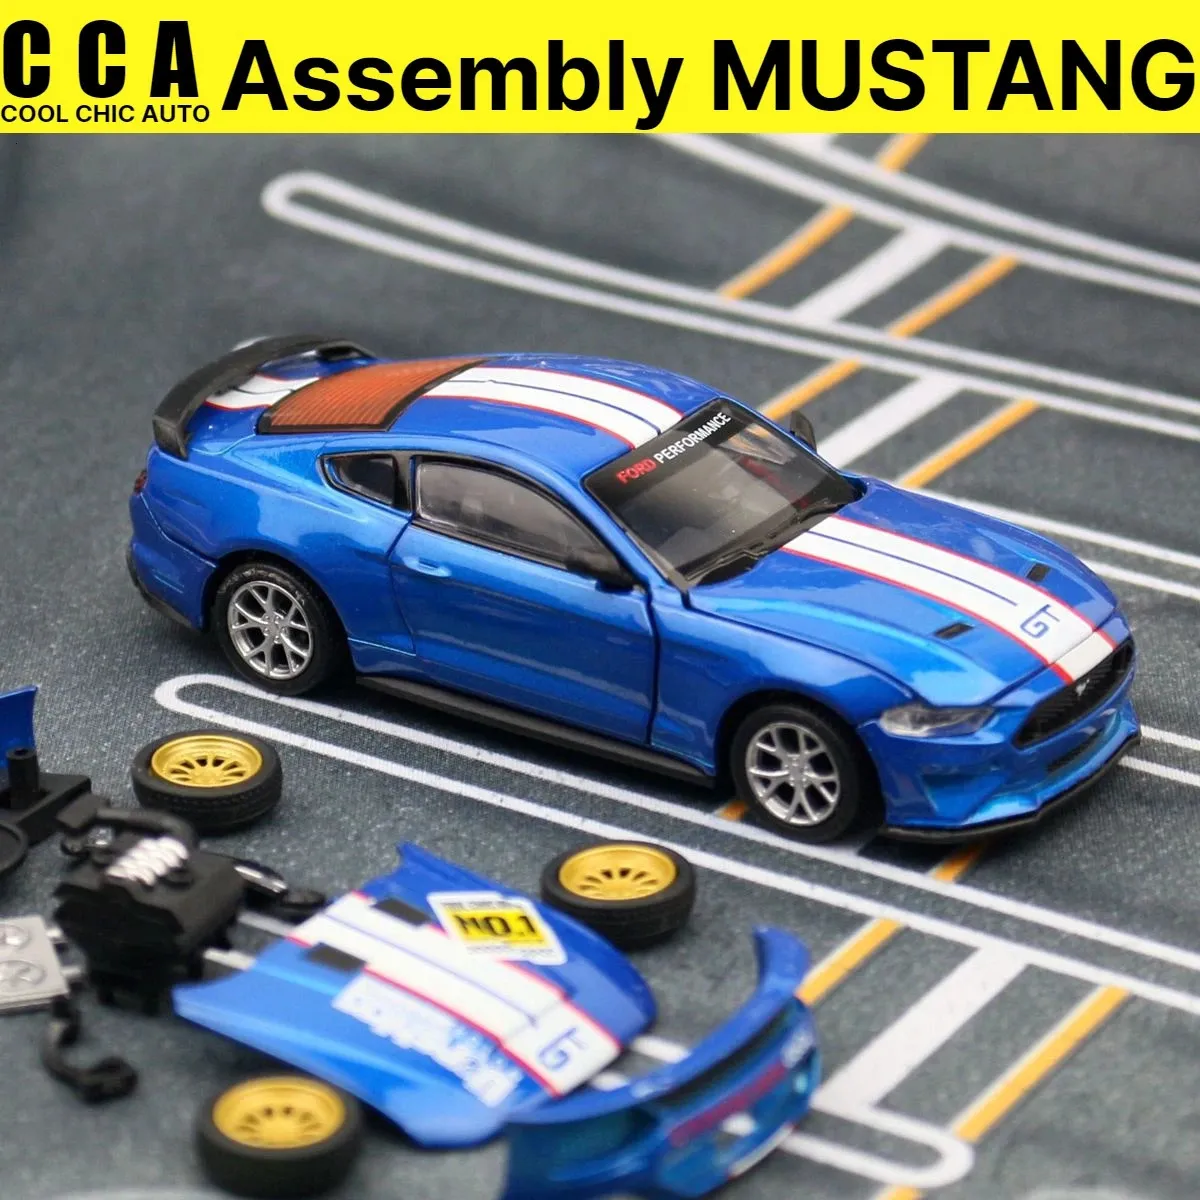 1 42 Ford Mustang Gt Modelo de Toy Carro de Toy Modelo Diecast Racing Racing Miniature Wheels Gree Metal Collection Presente para meninos crianças 231227